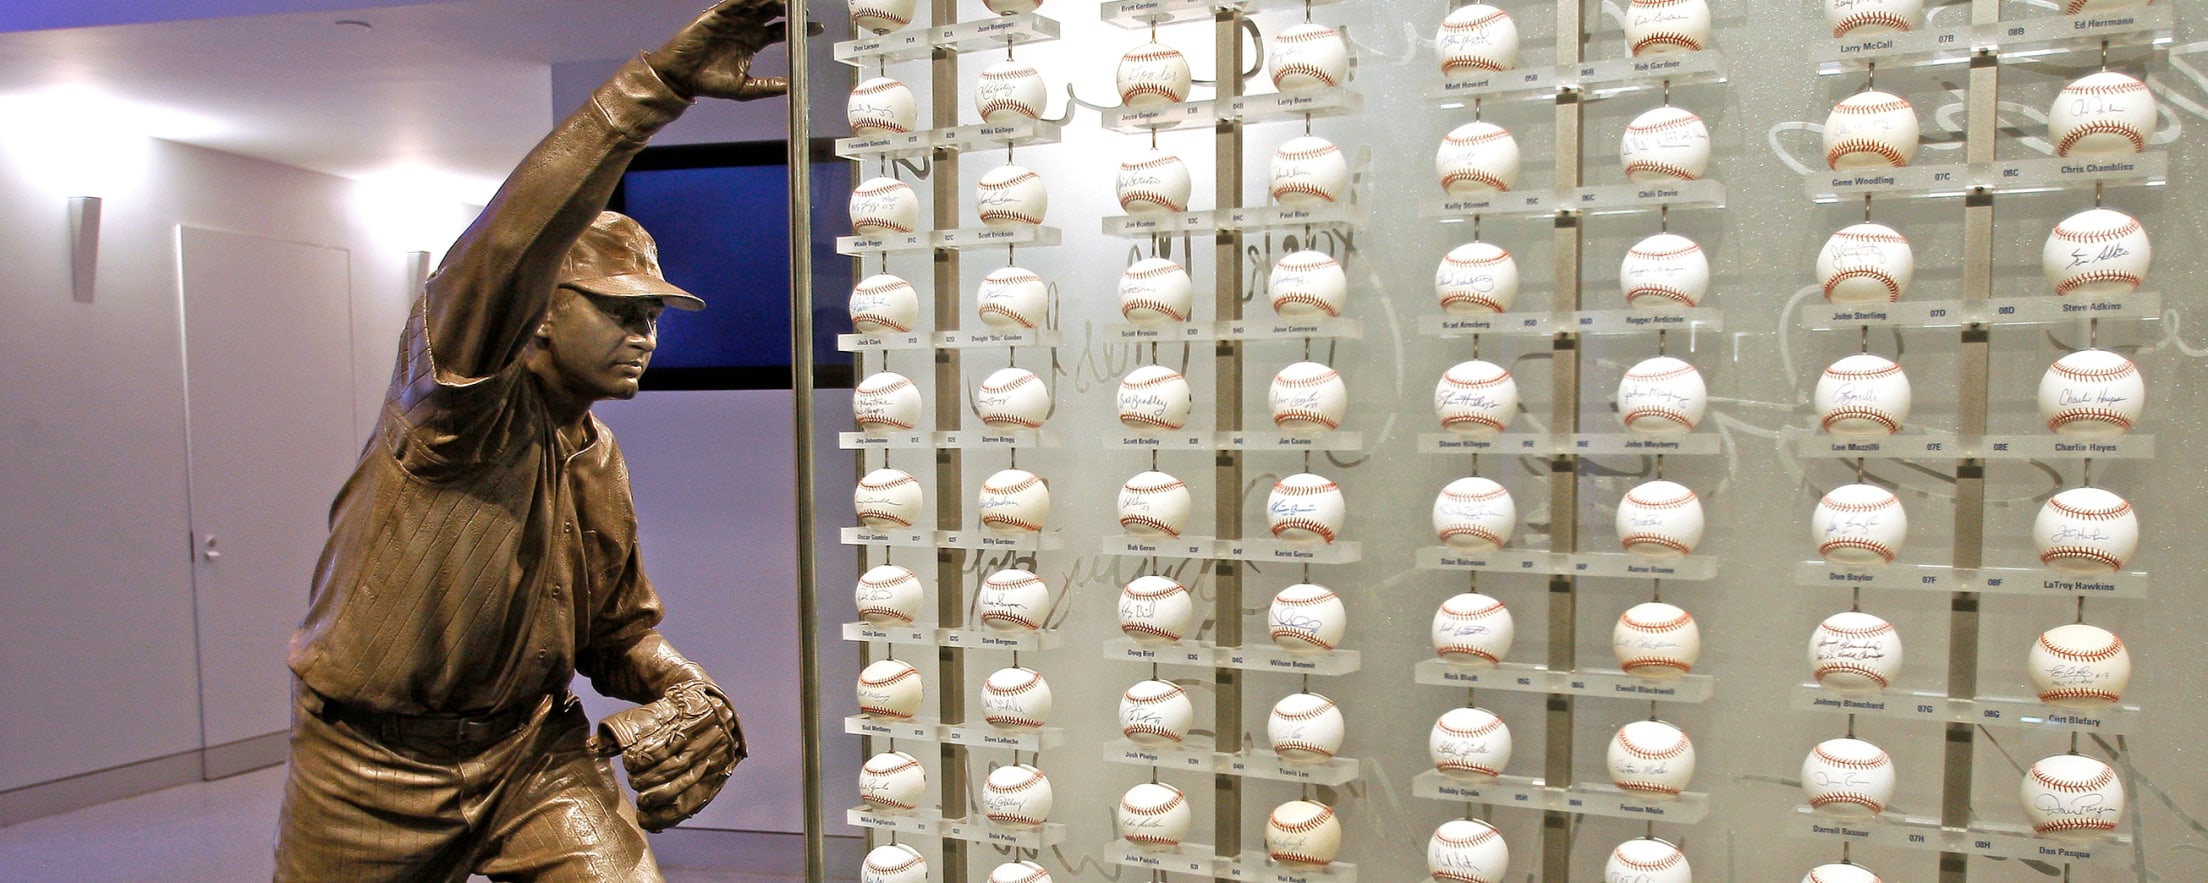 Derek Jeter New York Yankees 2009 World Series Display Case